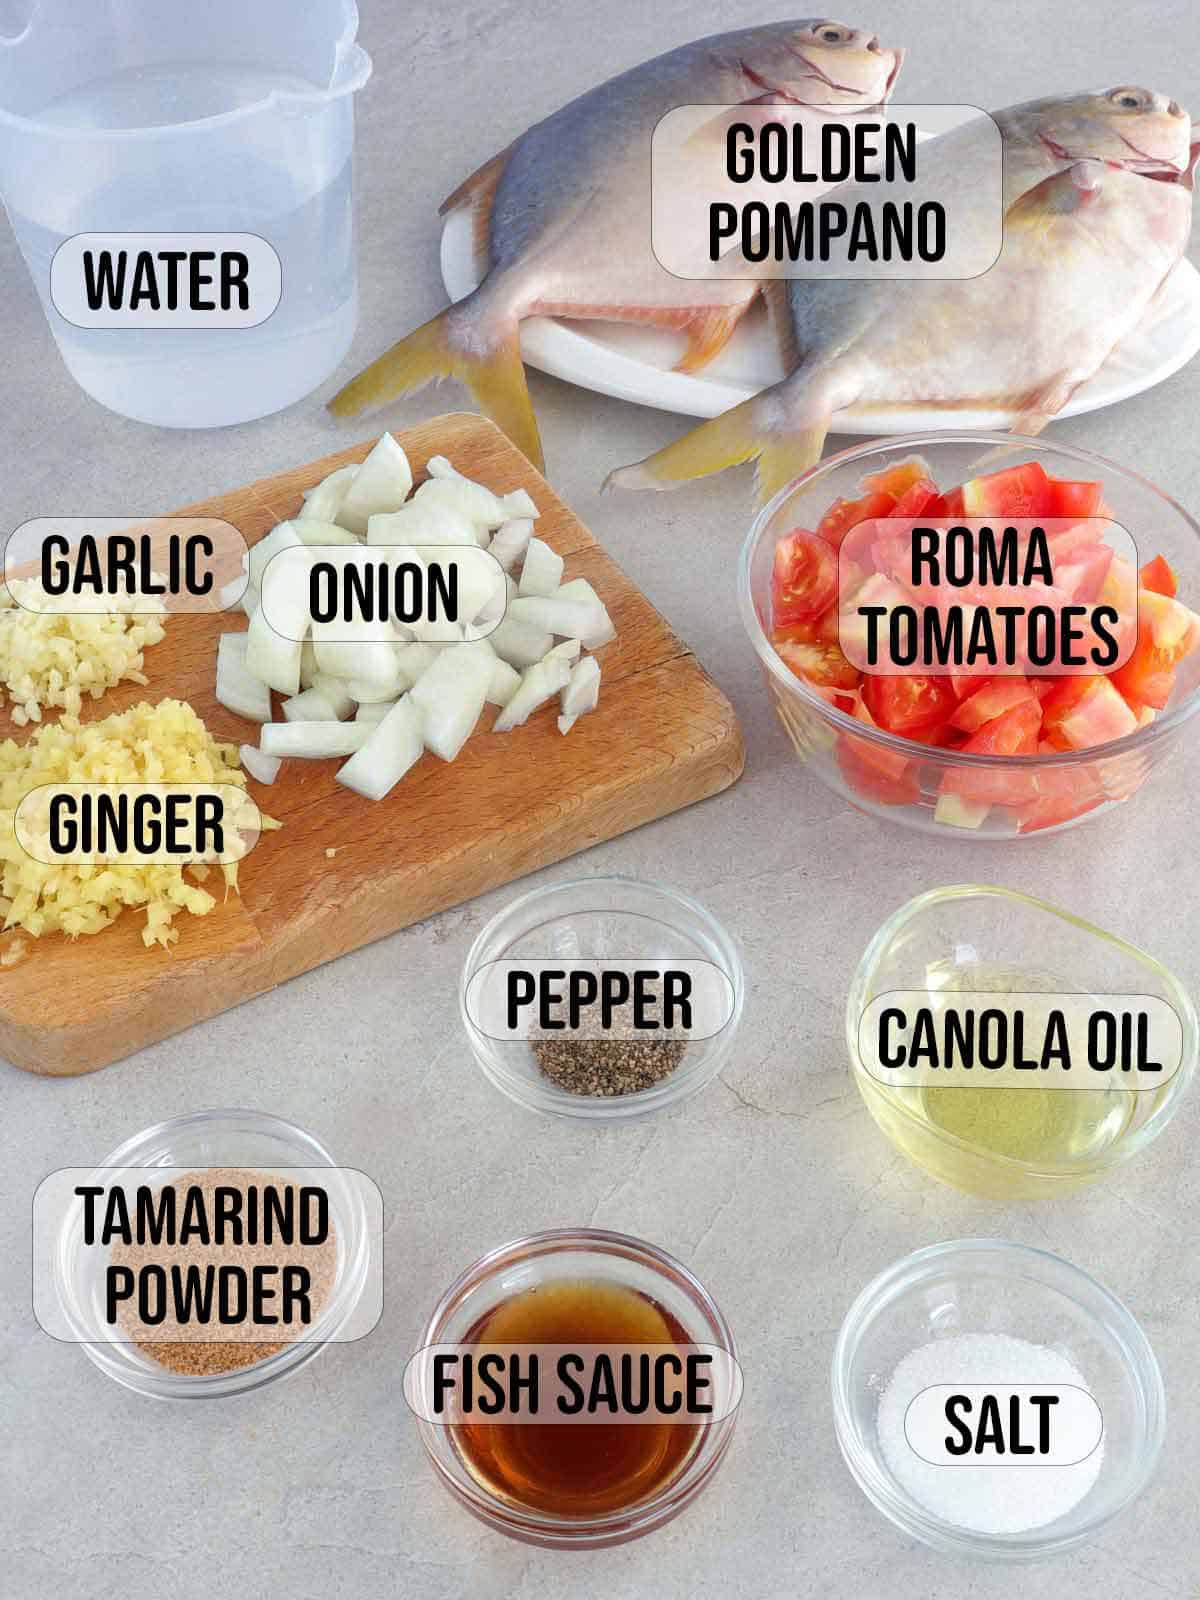 golden pompano, fish sauce, tamarind powder, tomatoes, ginger, garlic, onions, oil, water, salt, pepper in bowls.